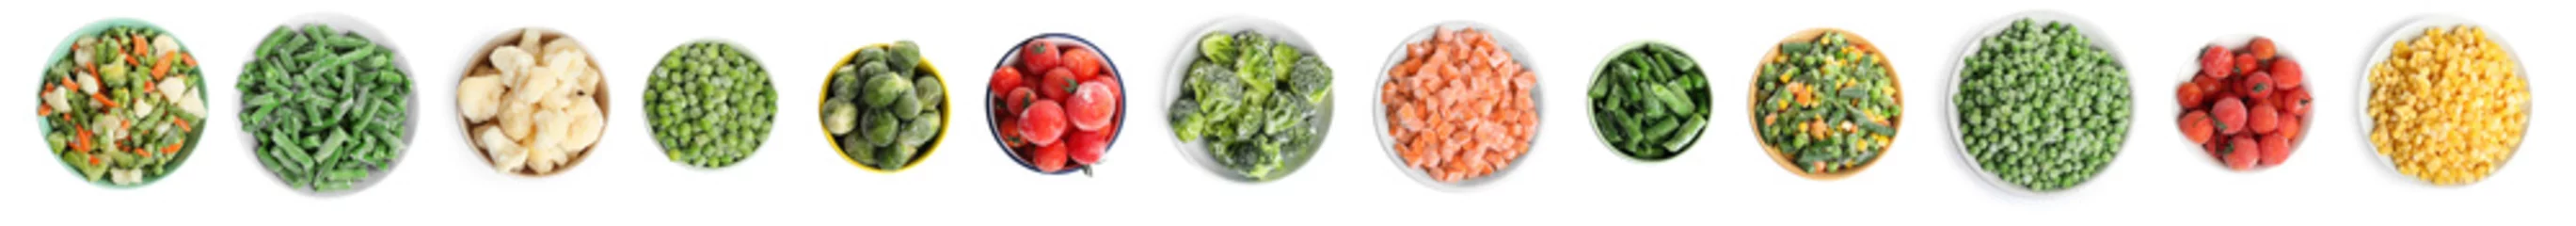 Foto op Aluminium Verse groenten Set of different frozen vegetables on white background, top view. Banner design